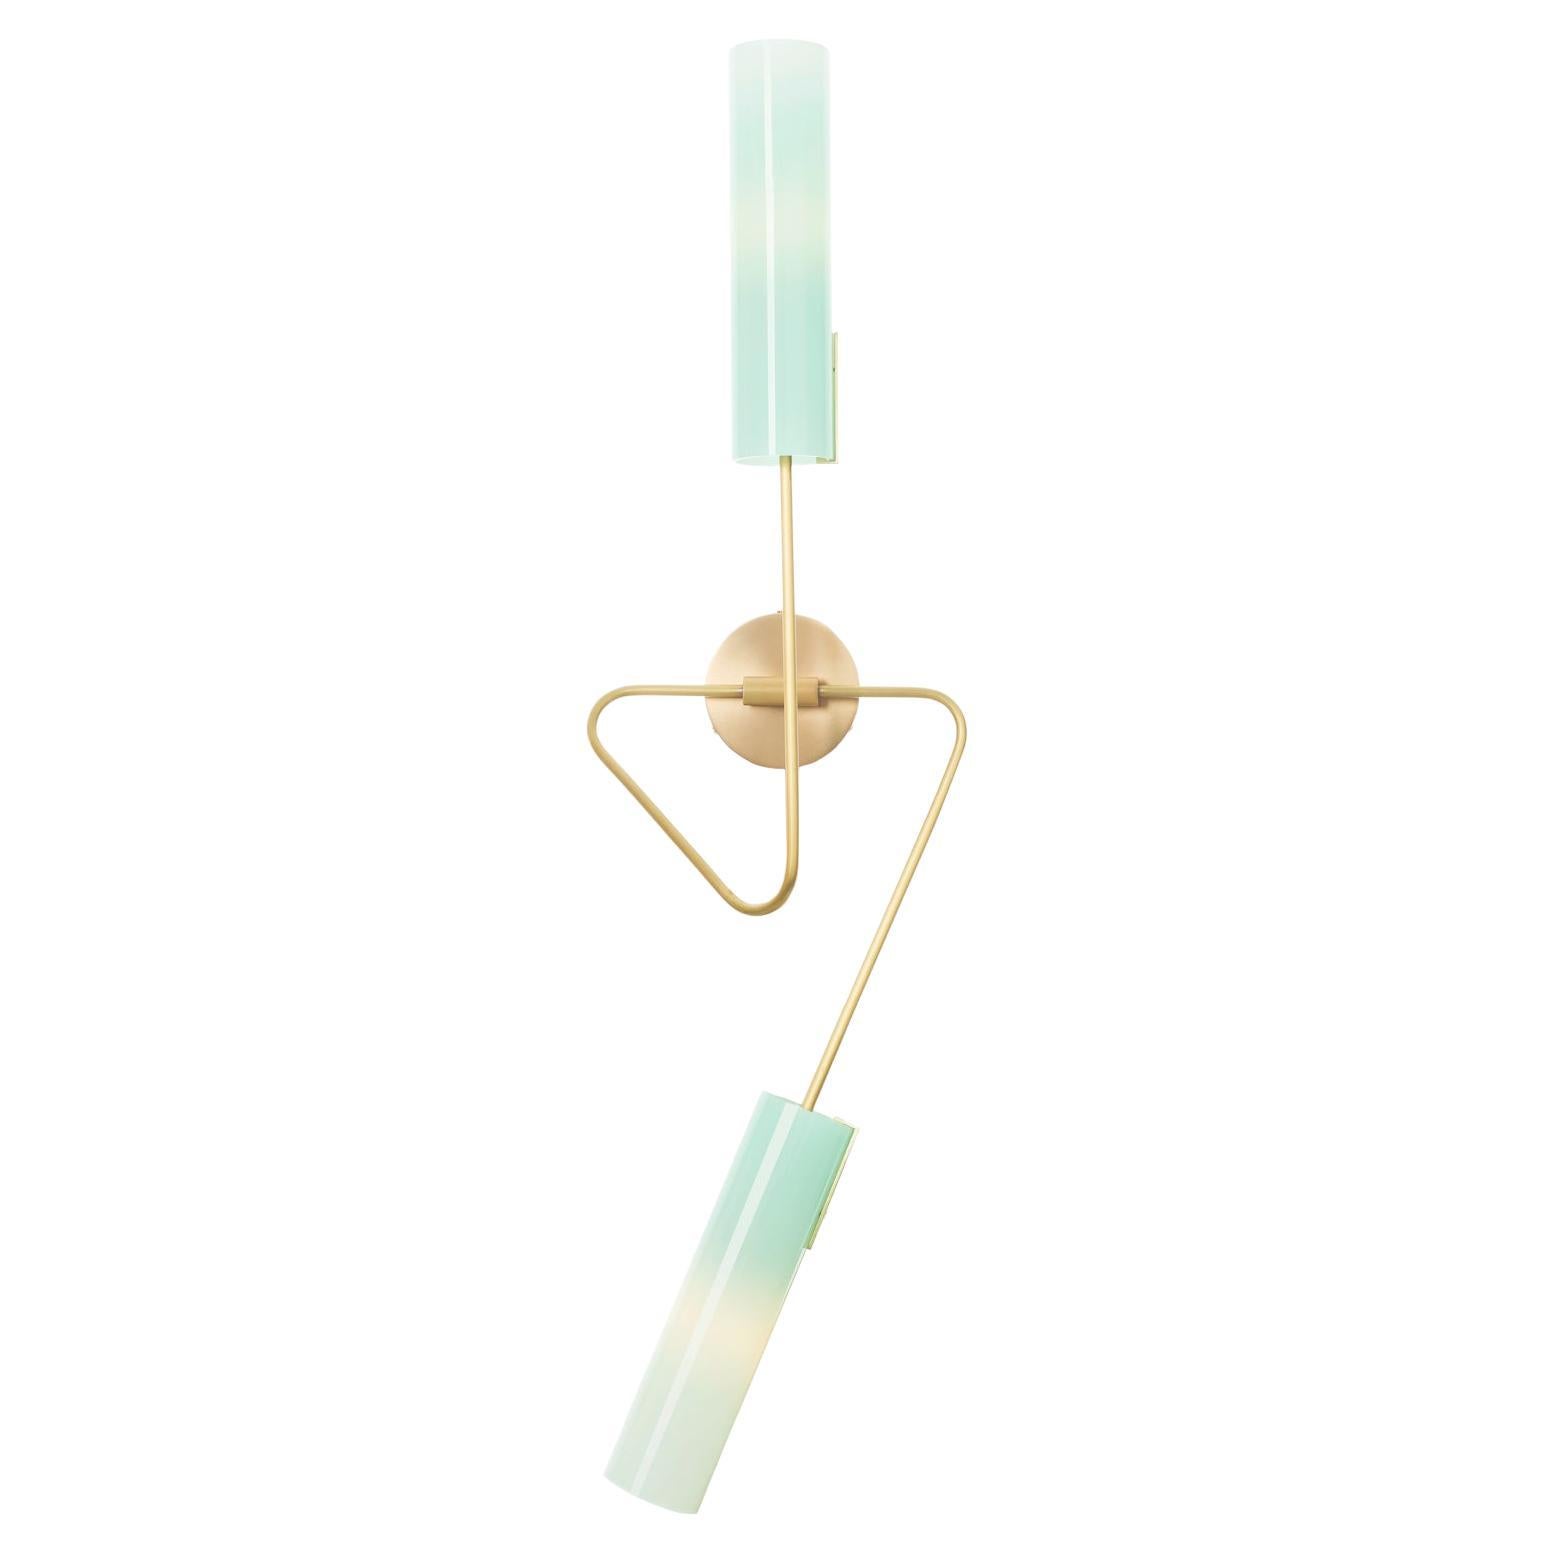 Continuum 02 Sconce: Satin Brass/Aqua Glass Shades by Avram Rusu Studio